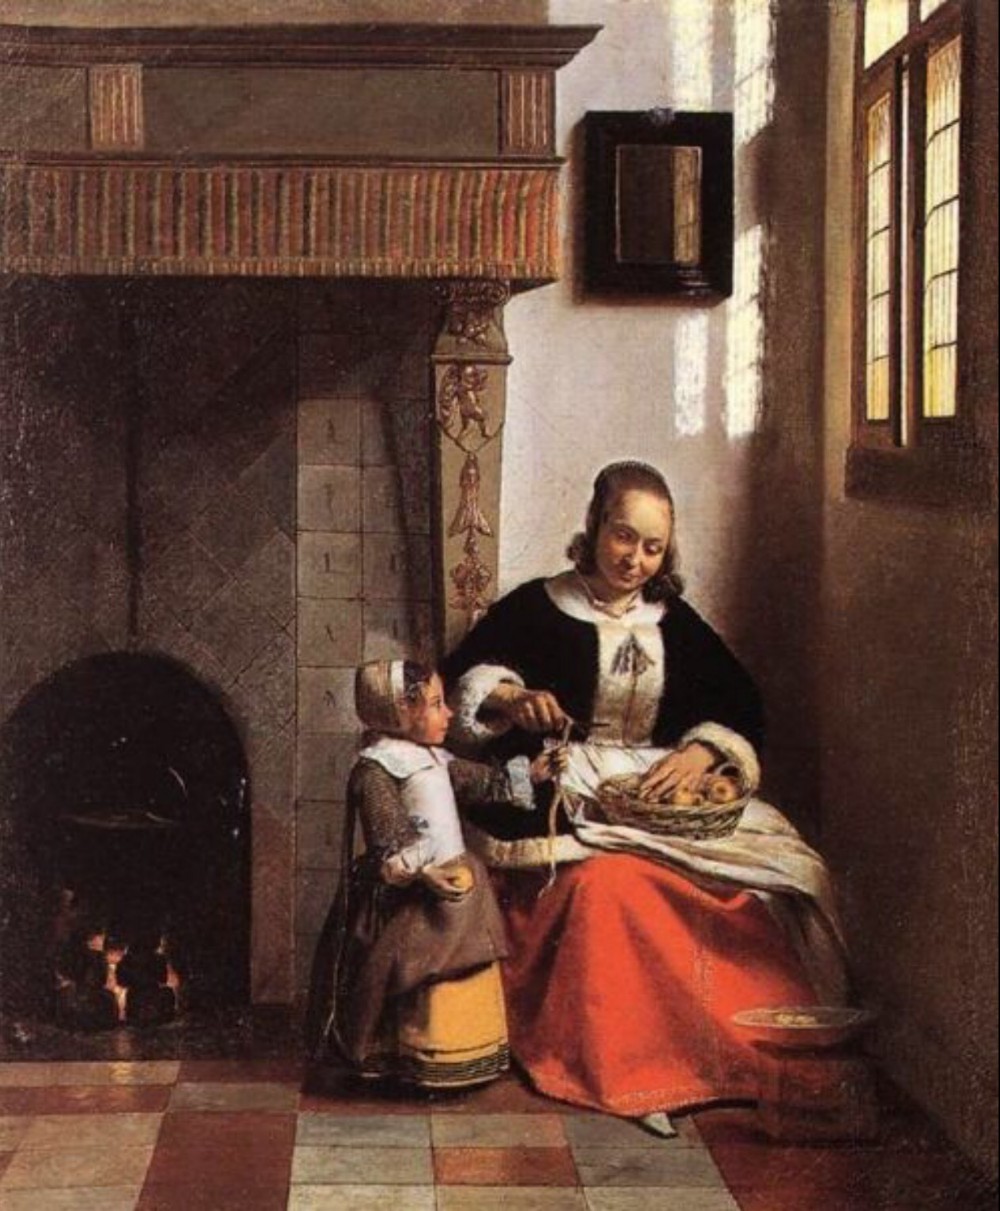 medici society print flemish interior scene after original oil painting by pieter de hooch c1916